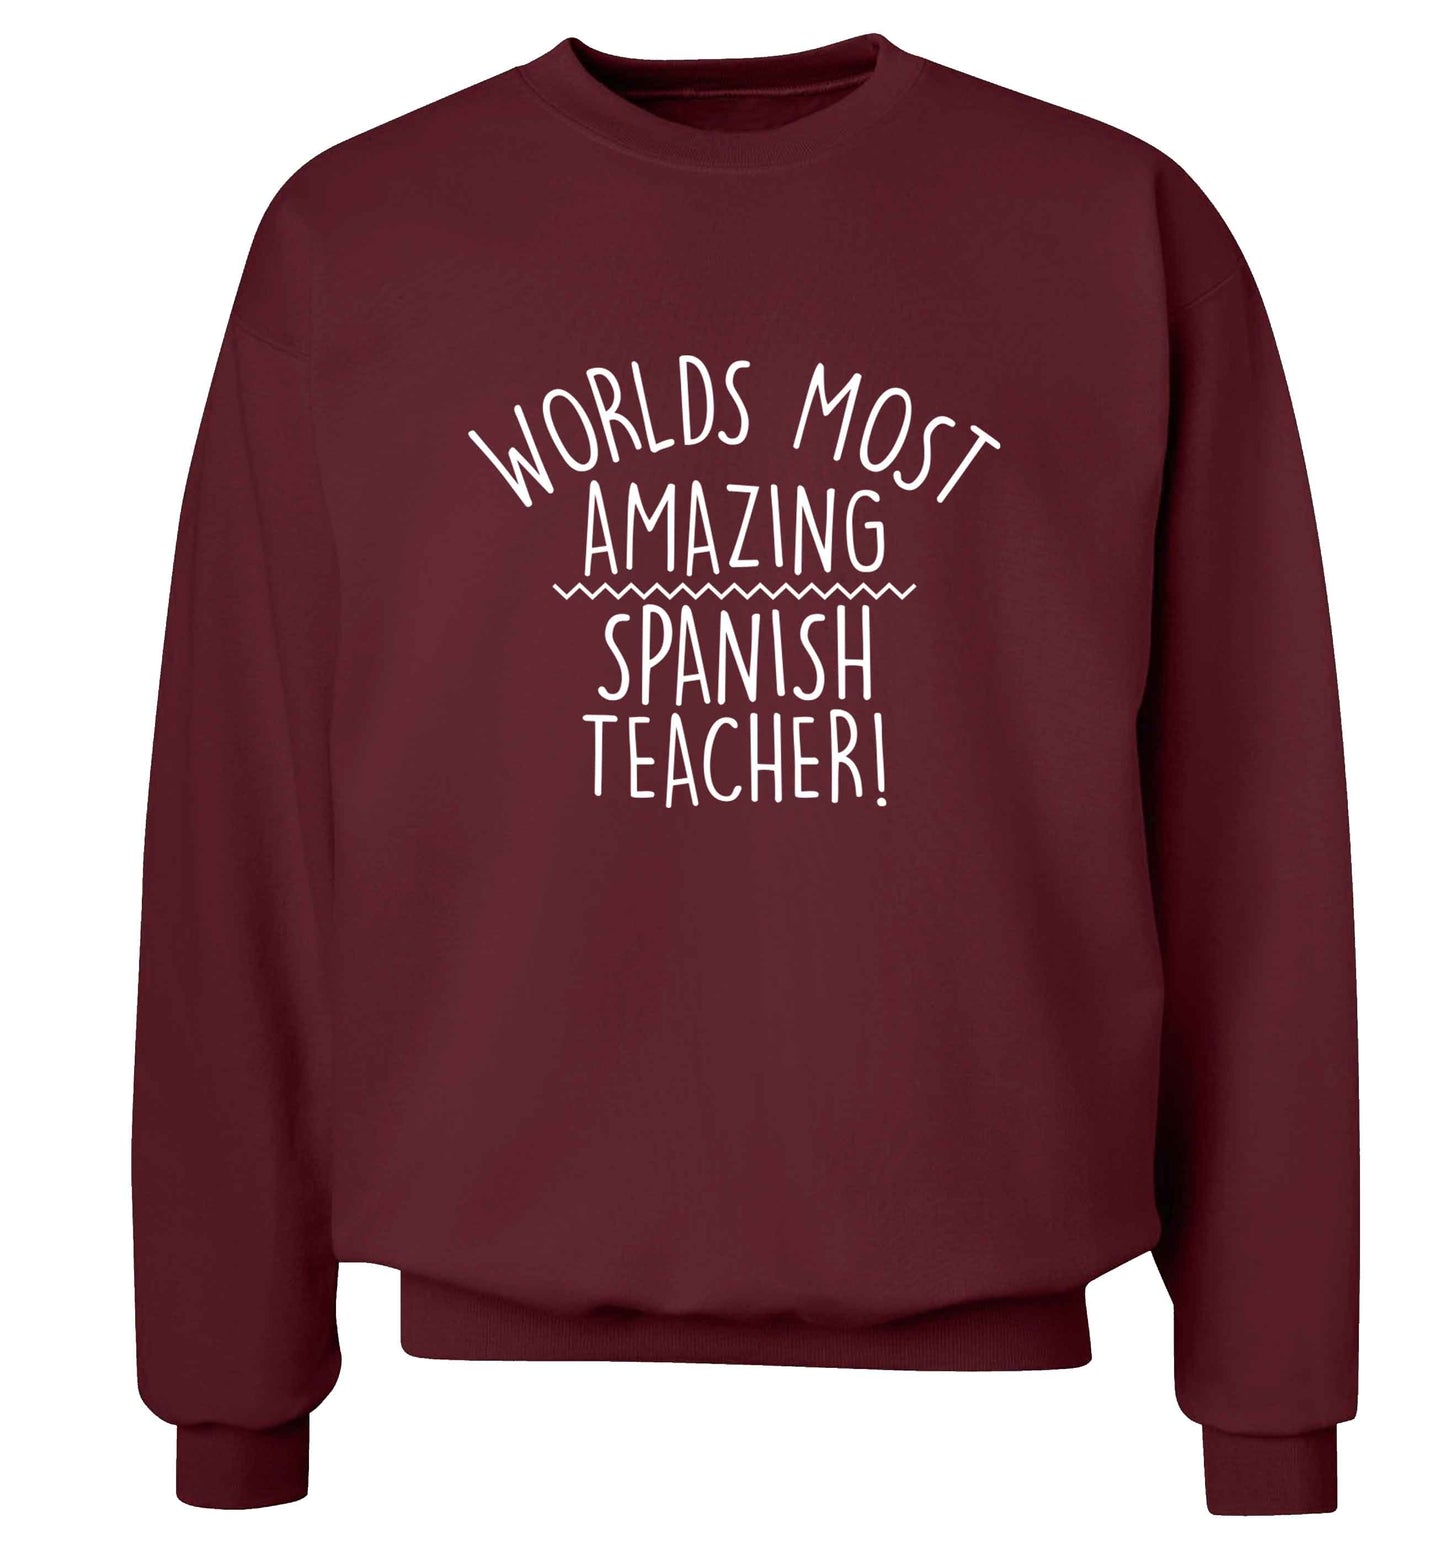 Worlds most amazing Spanish teacher adult's unisex maroon sweater 2XL